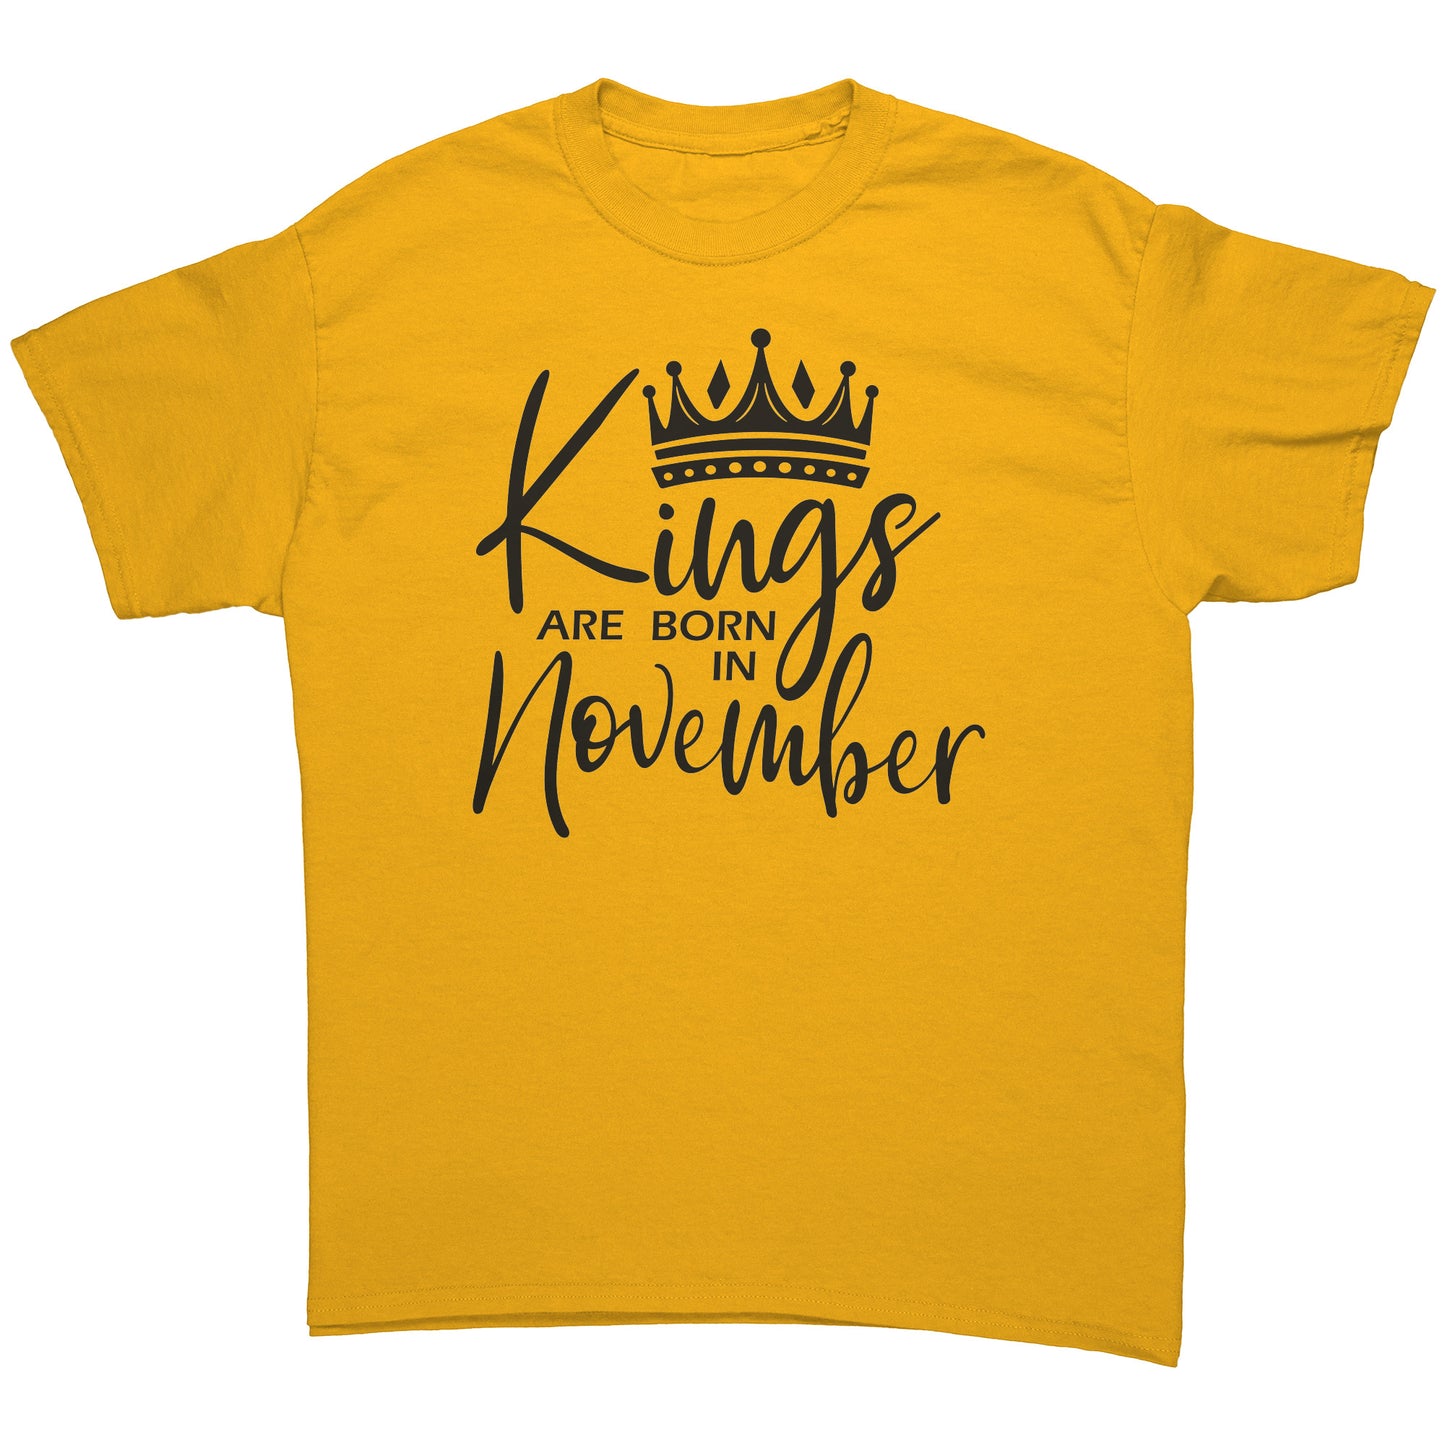 Kings Are Born In November Tee